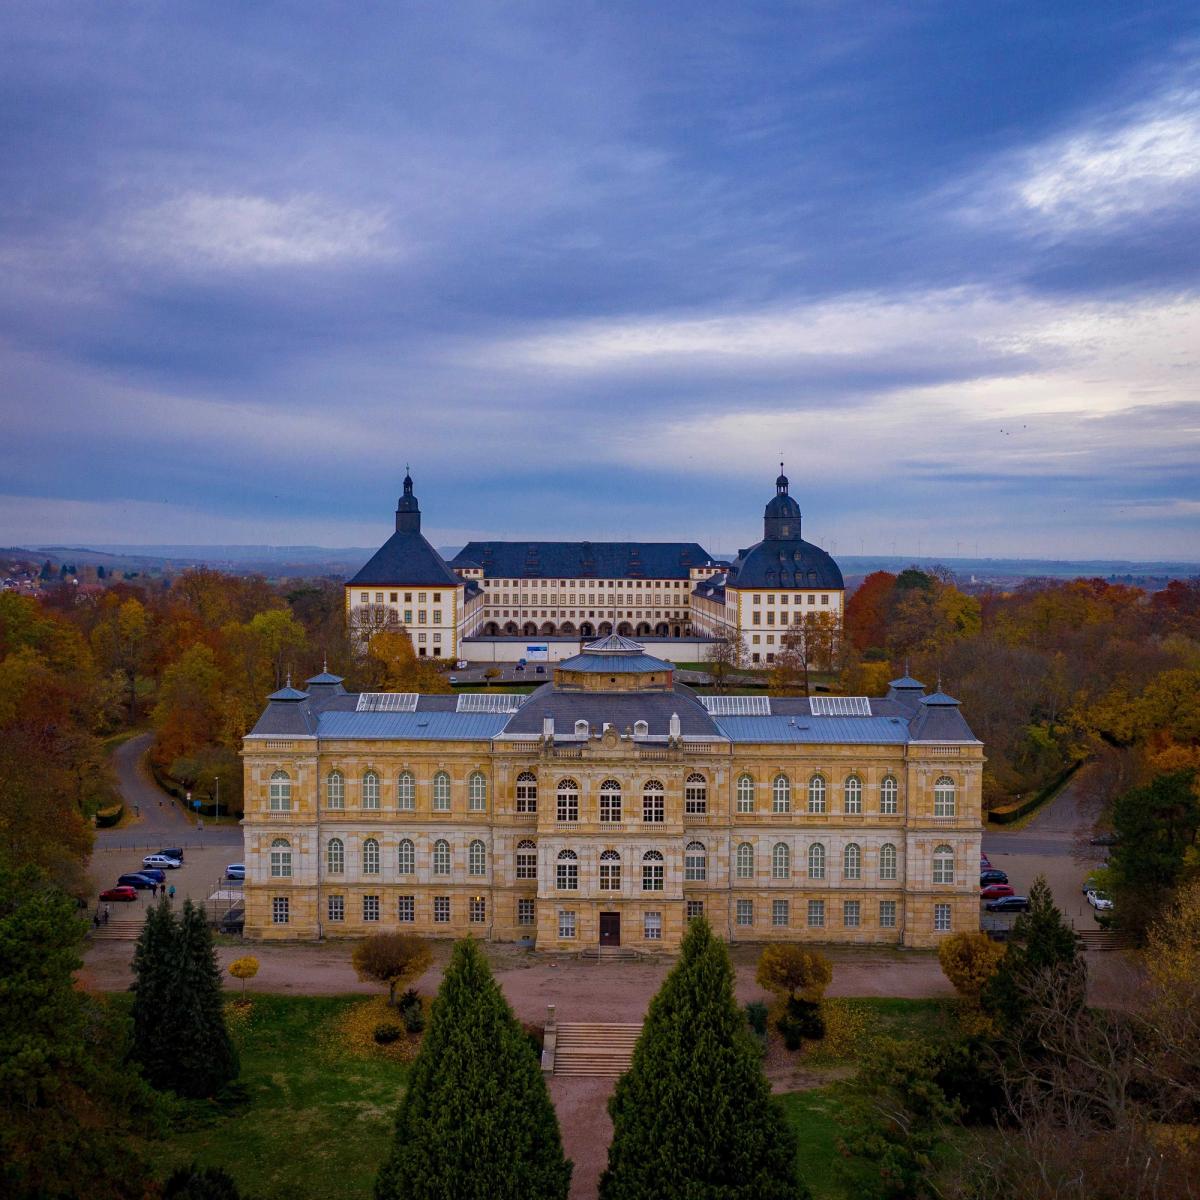 The baroque palace Schloss Friedenstein in Gotha will be the biggest beneficiary © Benjamin Bindewald